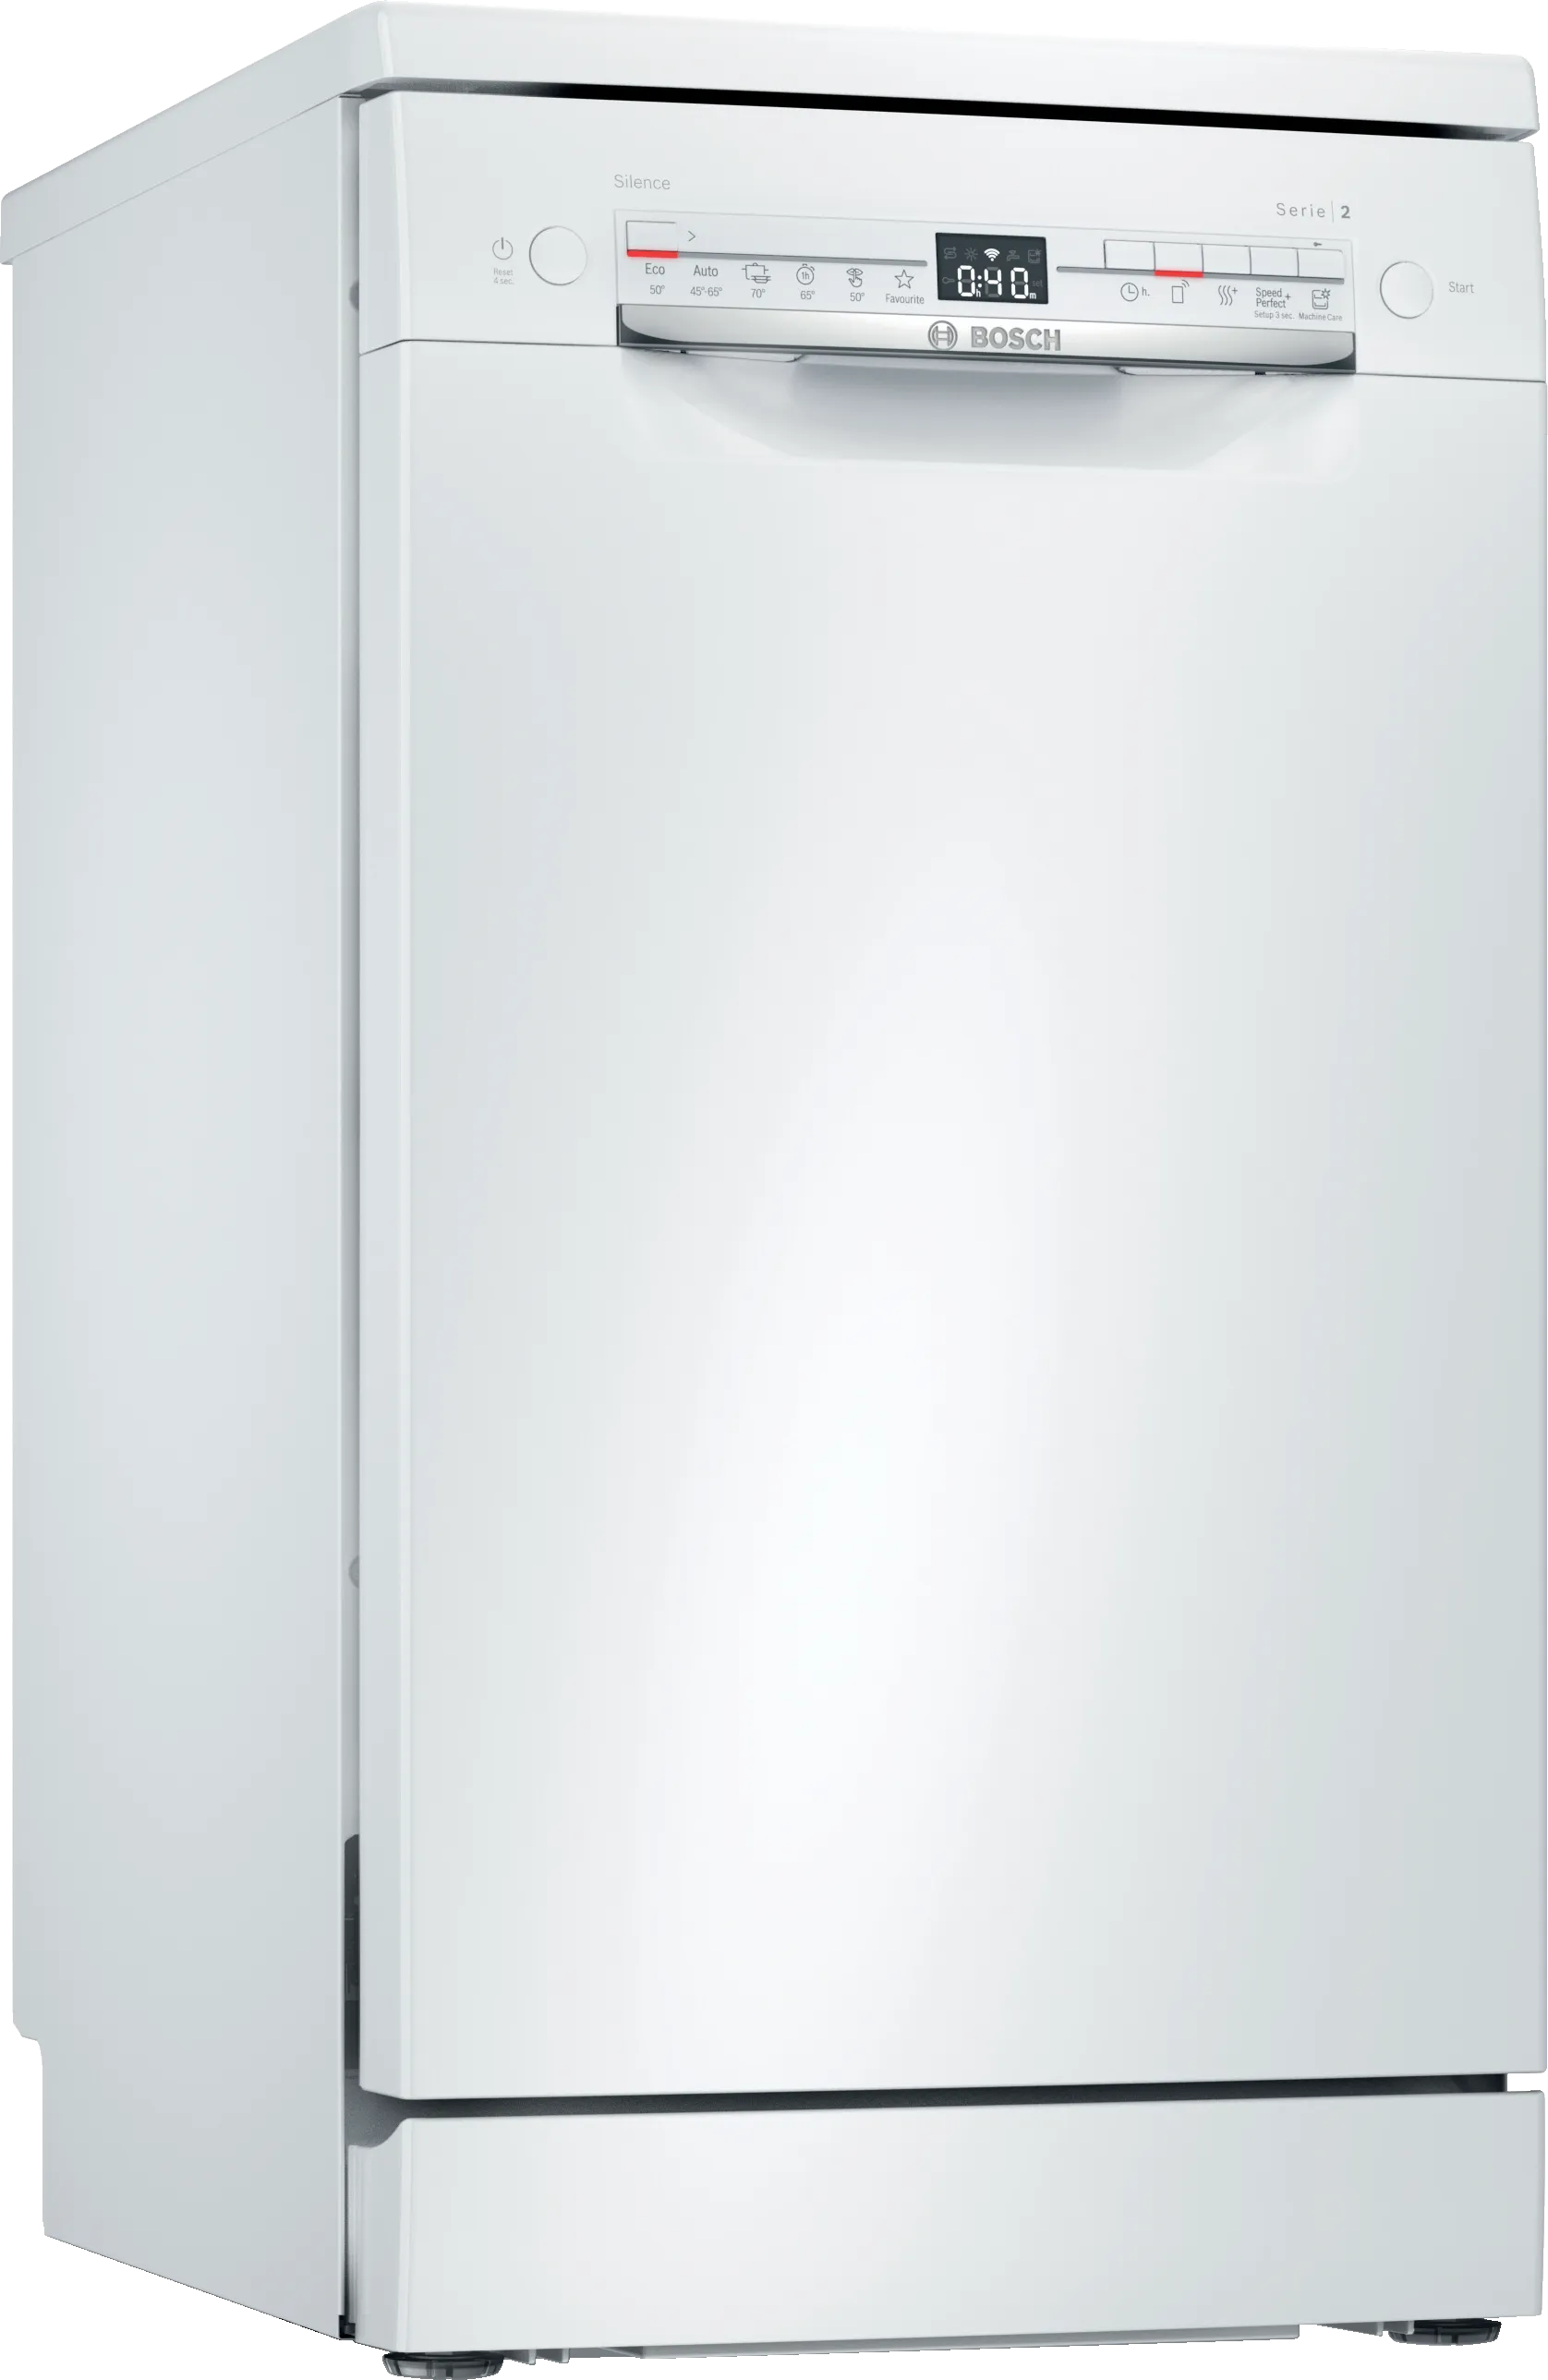 Series 2 Freestanding Dishwasher 45 cm White 